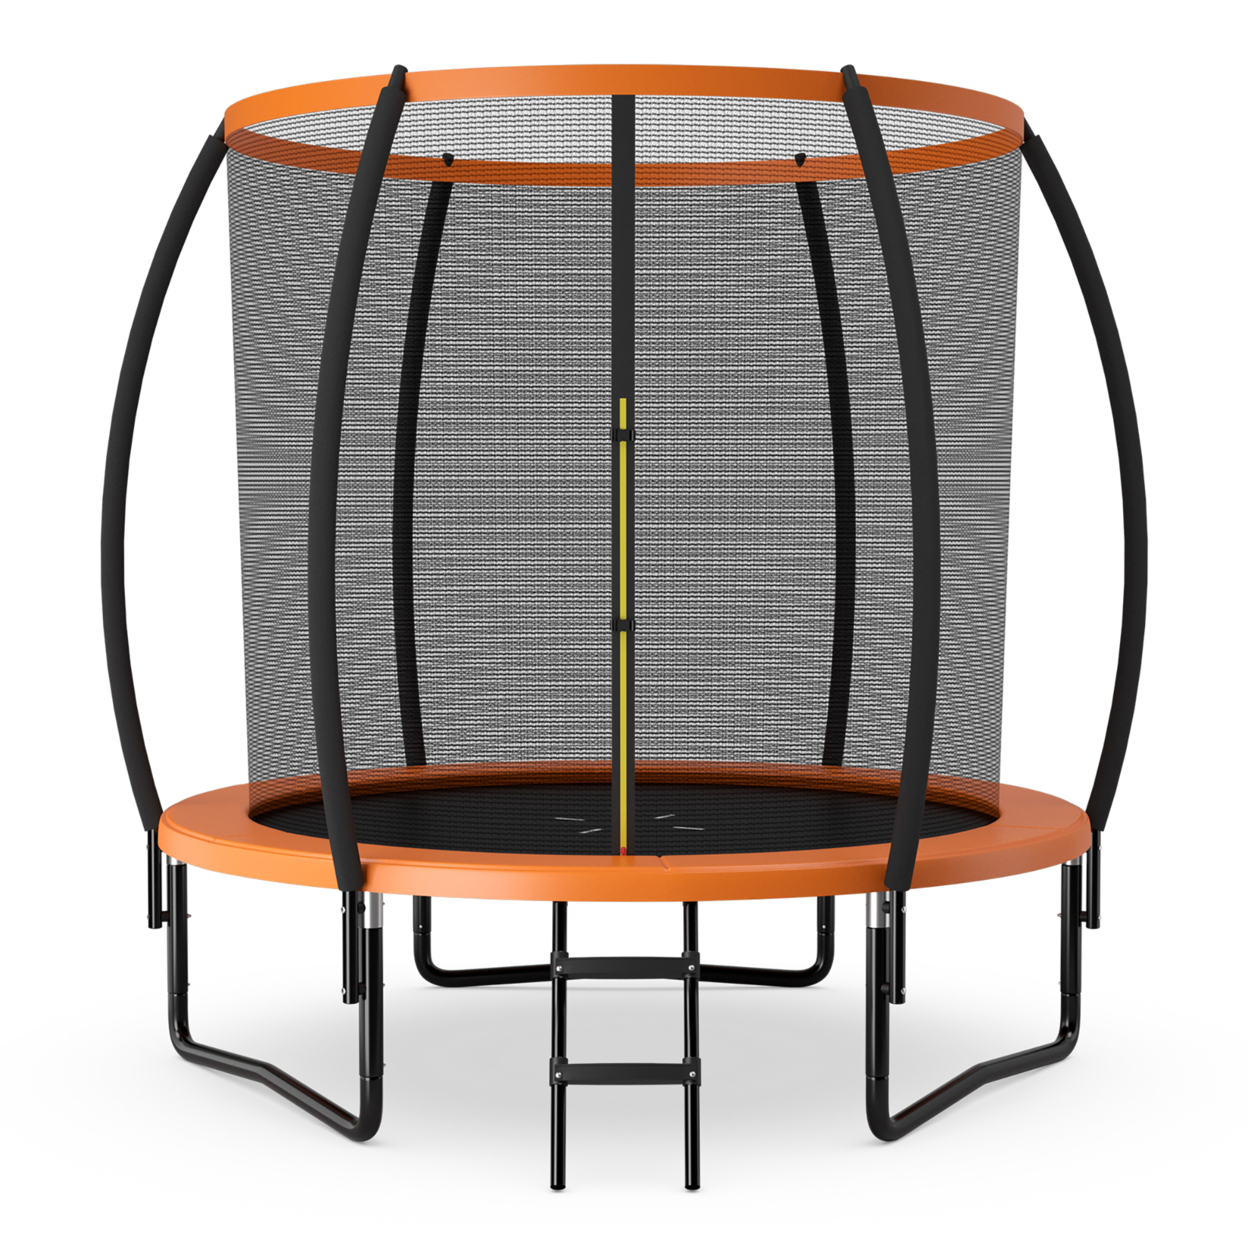 12FT Recreational Trampoline W/ Ladder Enclosure Net Safety Pad Outdoor - Orange